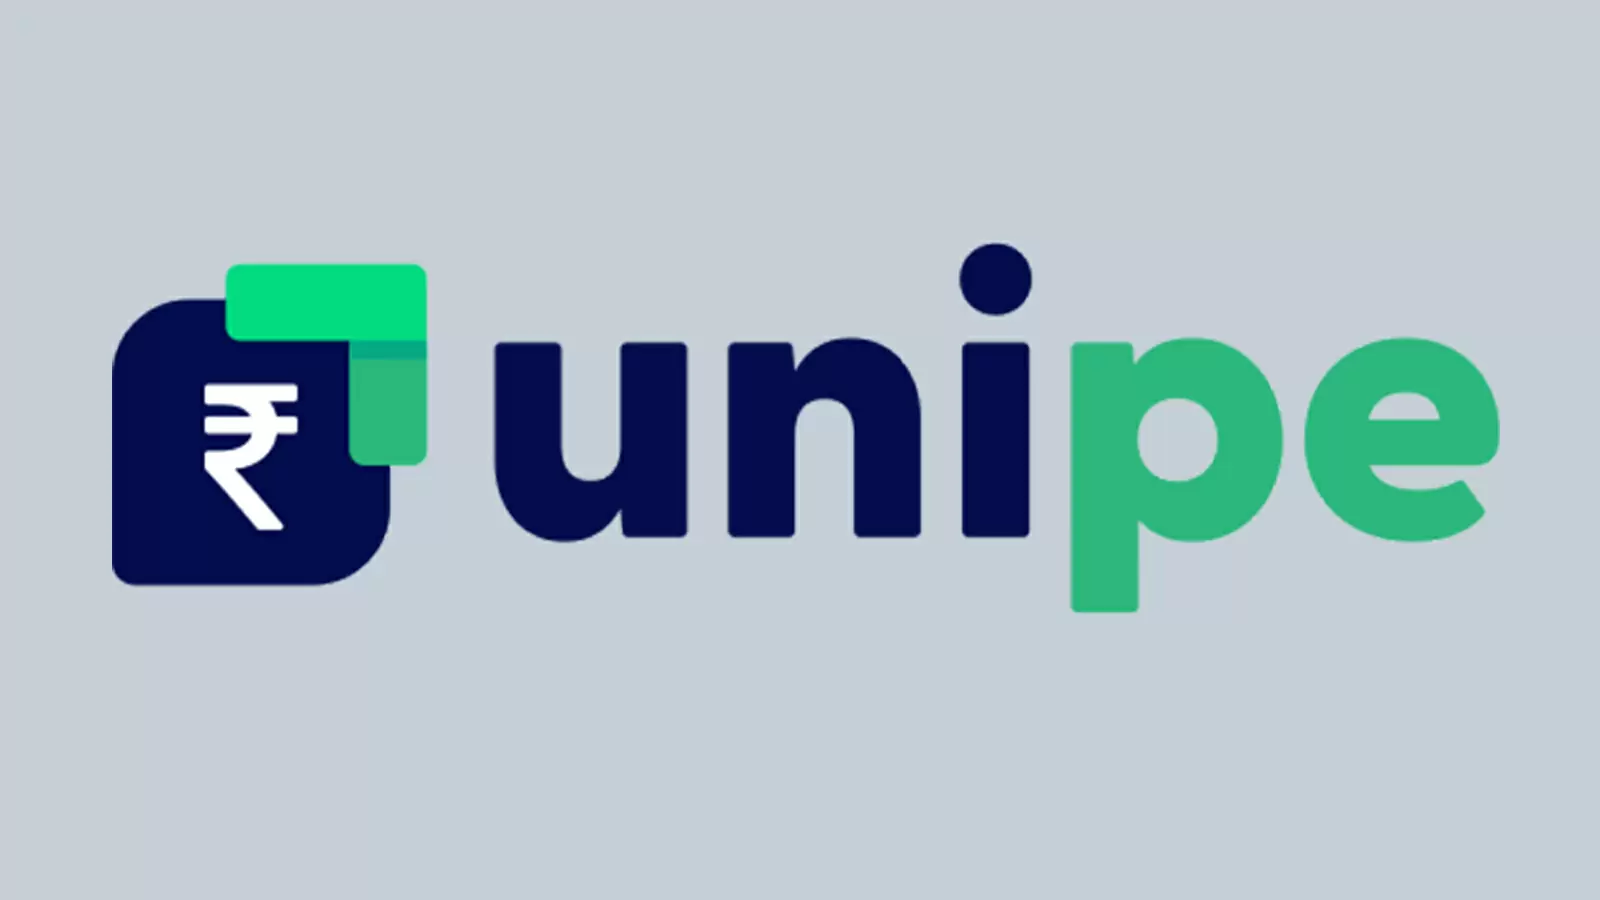 Unipe: Revolutionizing India's Workforce and Enterprises through Financial Inclusion